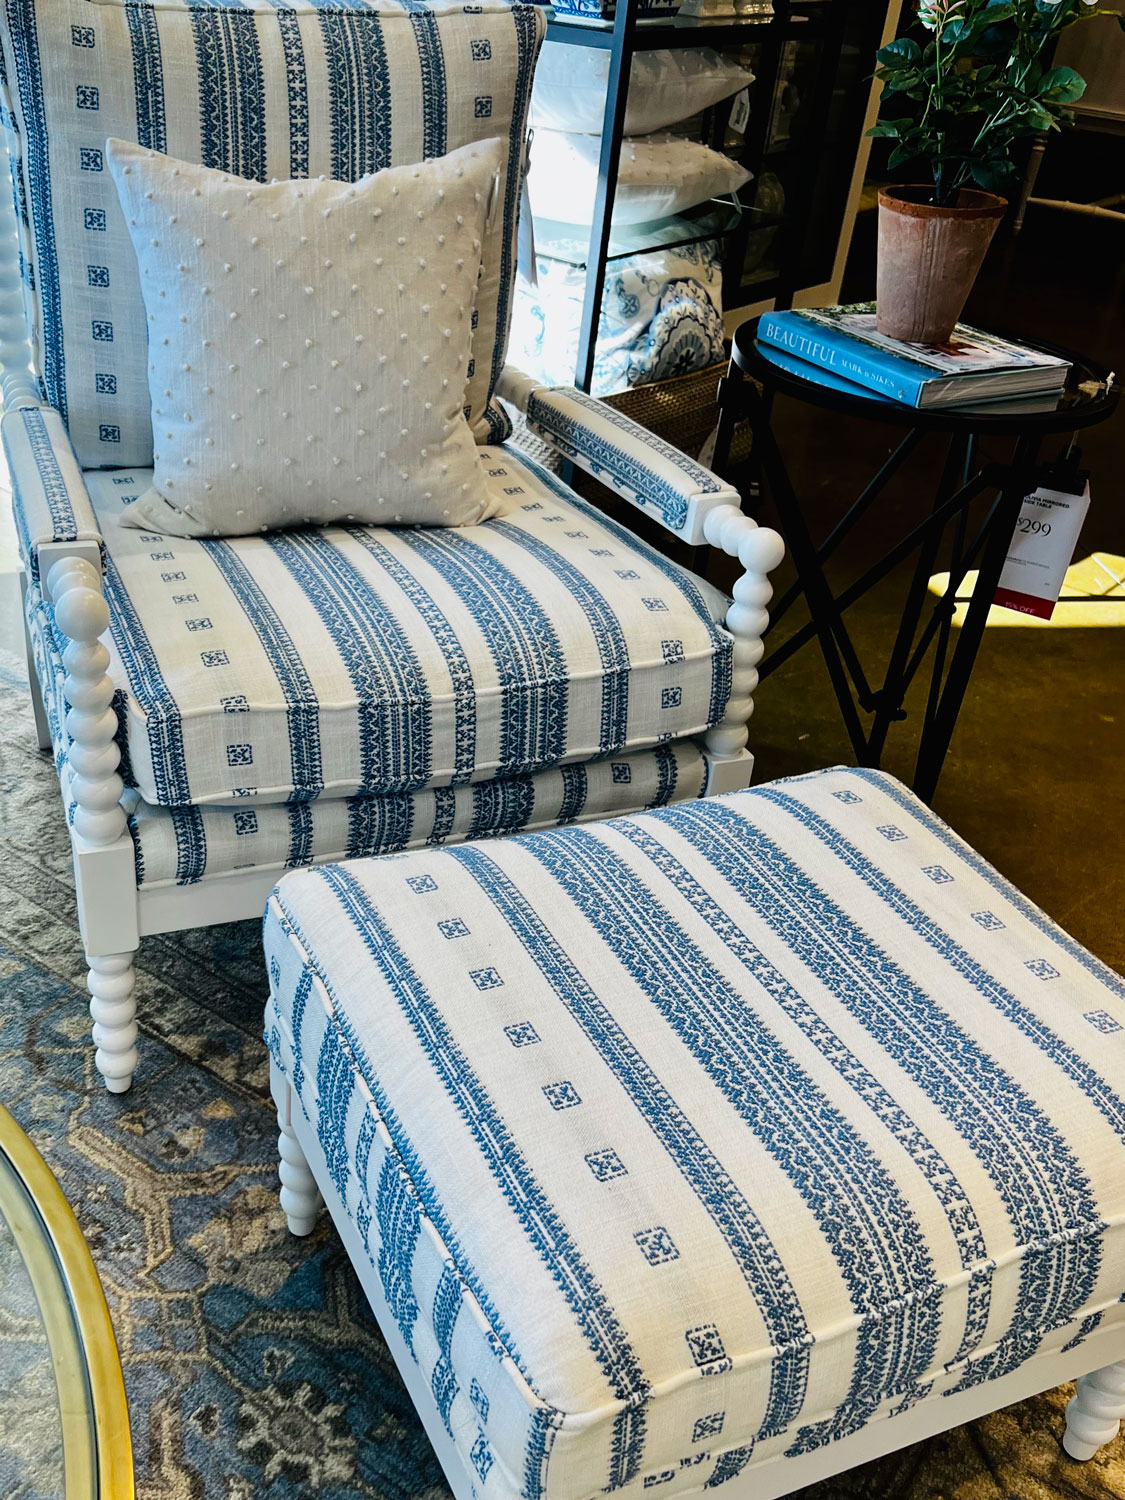 bobbin chair in blue and white stripe
things to love at Ballard Design